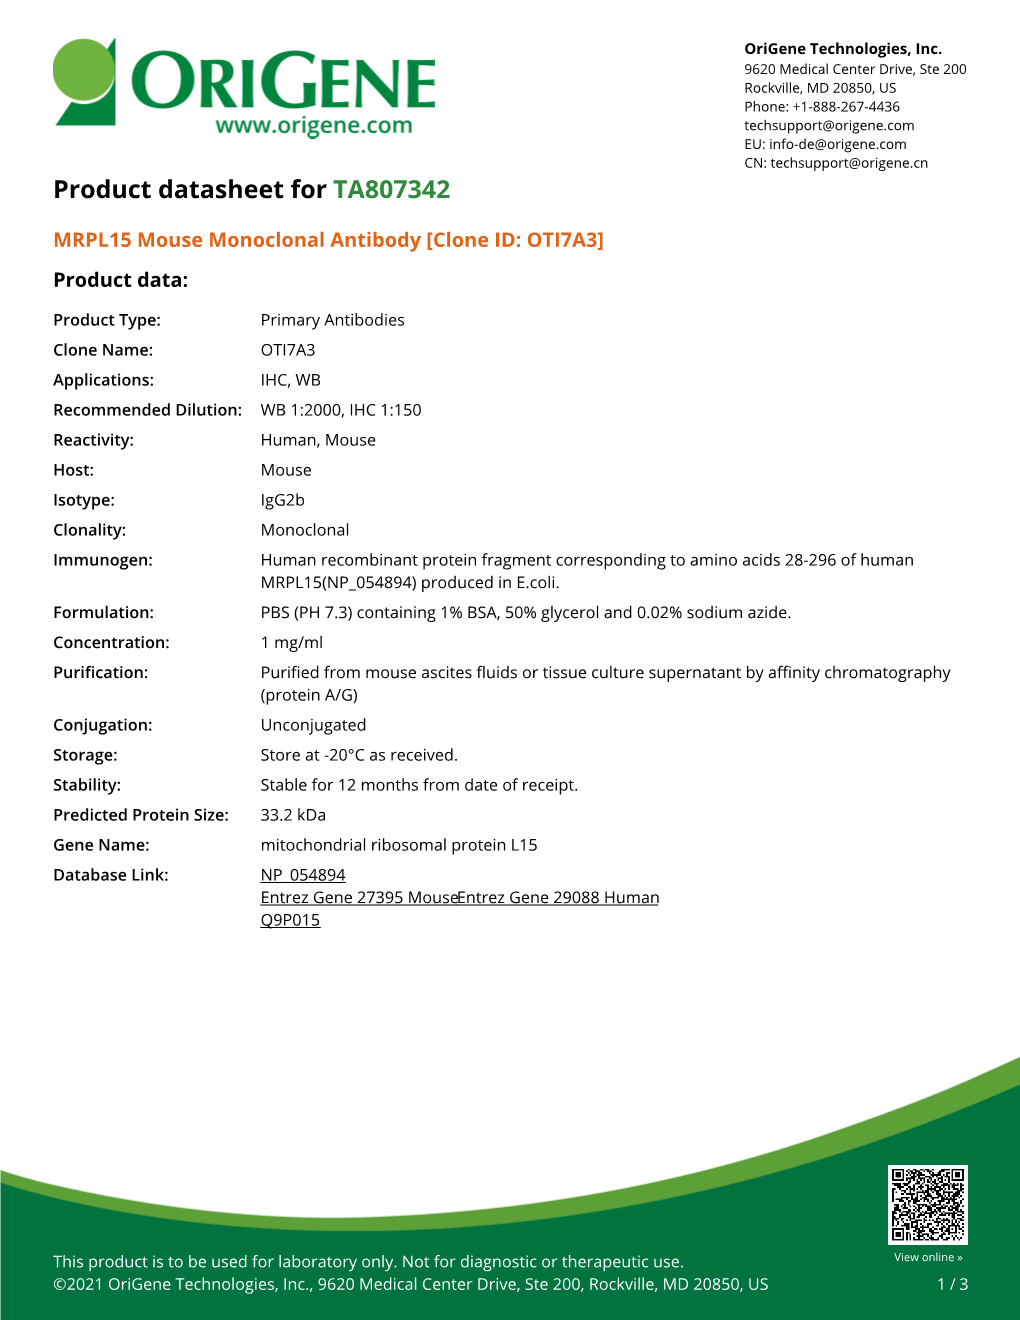 MRPL15 Mouse Monoclonal Antibody [Clone ID: OTI7A3] Product Data